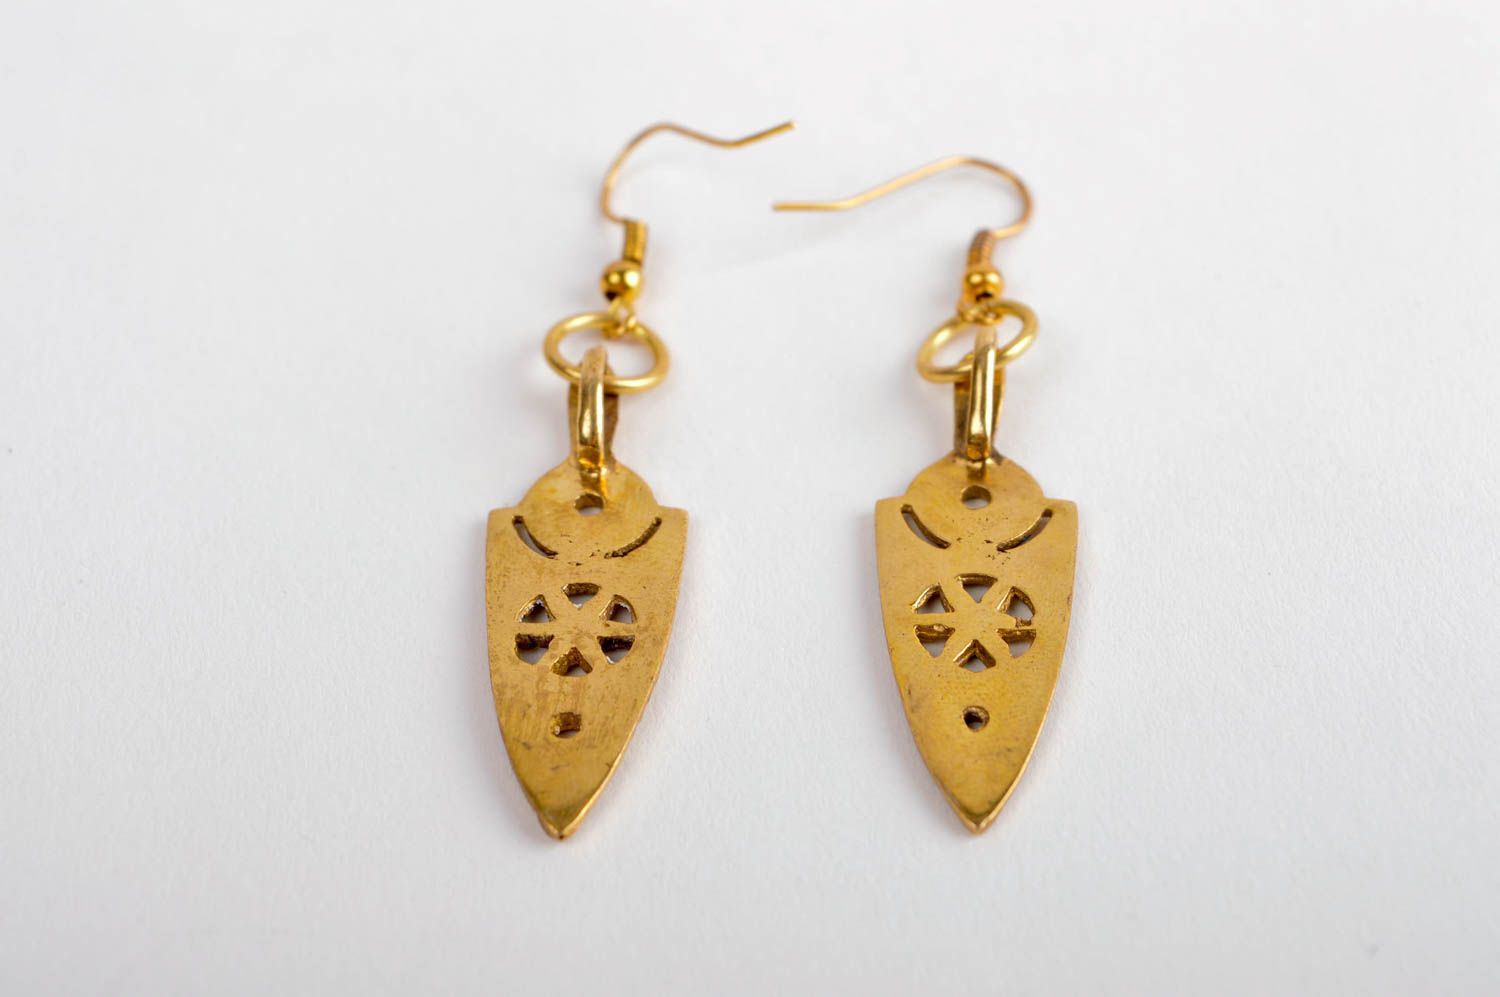 Unusual handmade metal earrings cool jewelry designs metal craft gifts for her photo 4